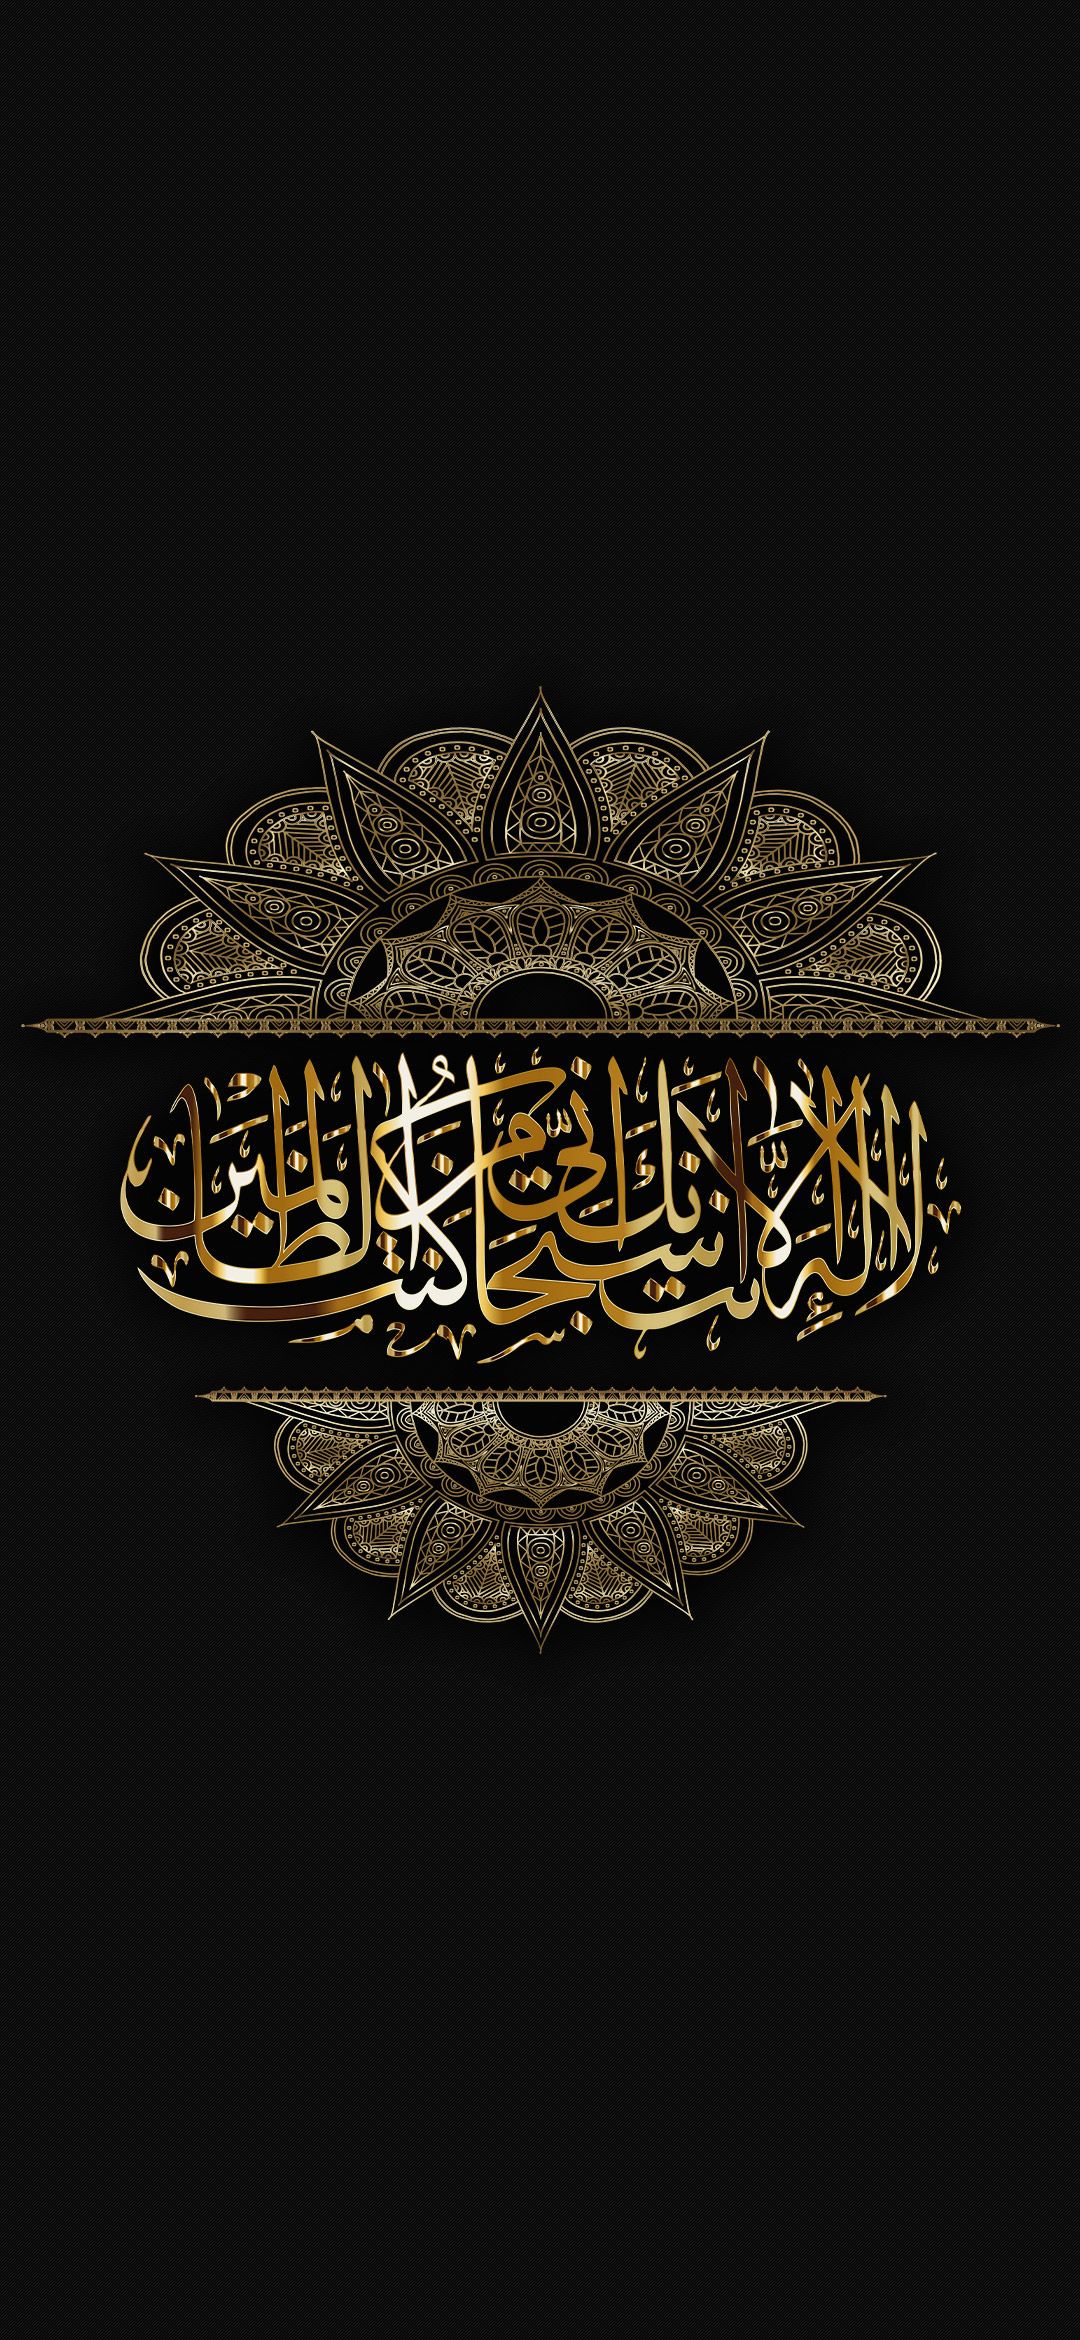 Islamic Calligraphy AMOLED HD Smartphone Wallpaper. Smartphone wallpaper, Islamic wallpaper hd, Islamic wallpaper